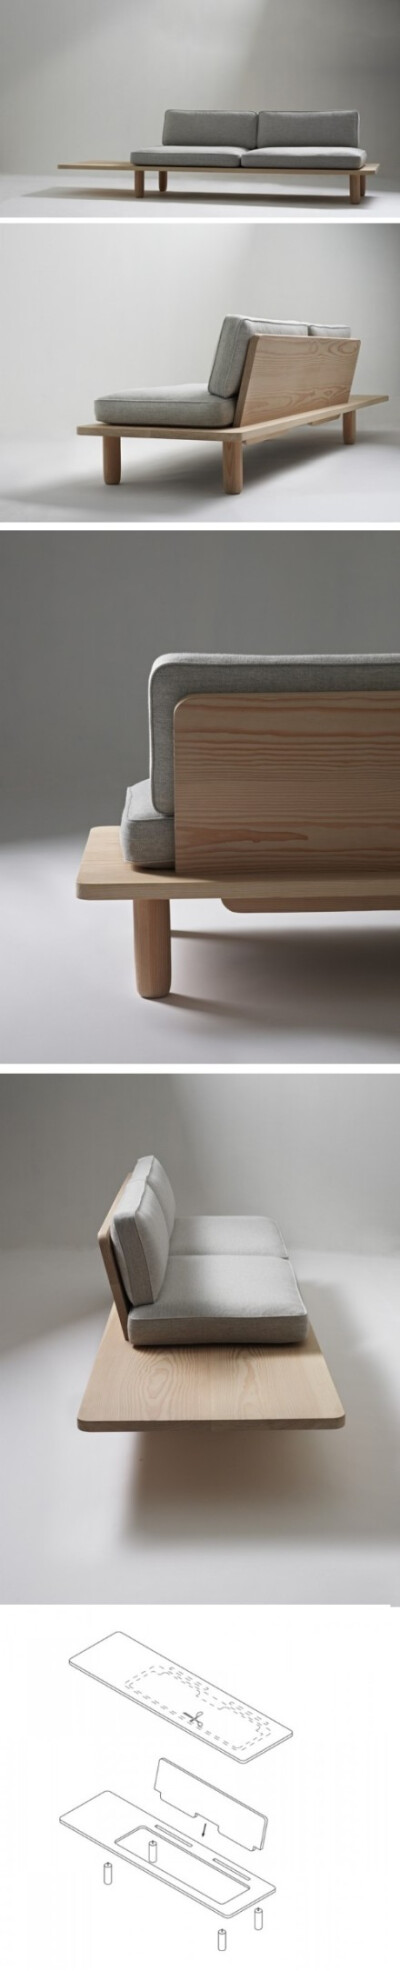 Plank Sofa by KnudsenBergHindenes + Myhr. 一张简洁漂亮的沙发，挪威设计师作品。